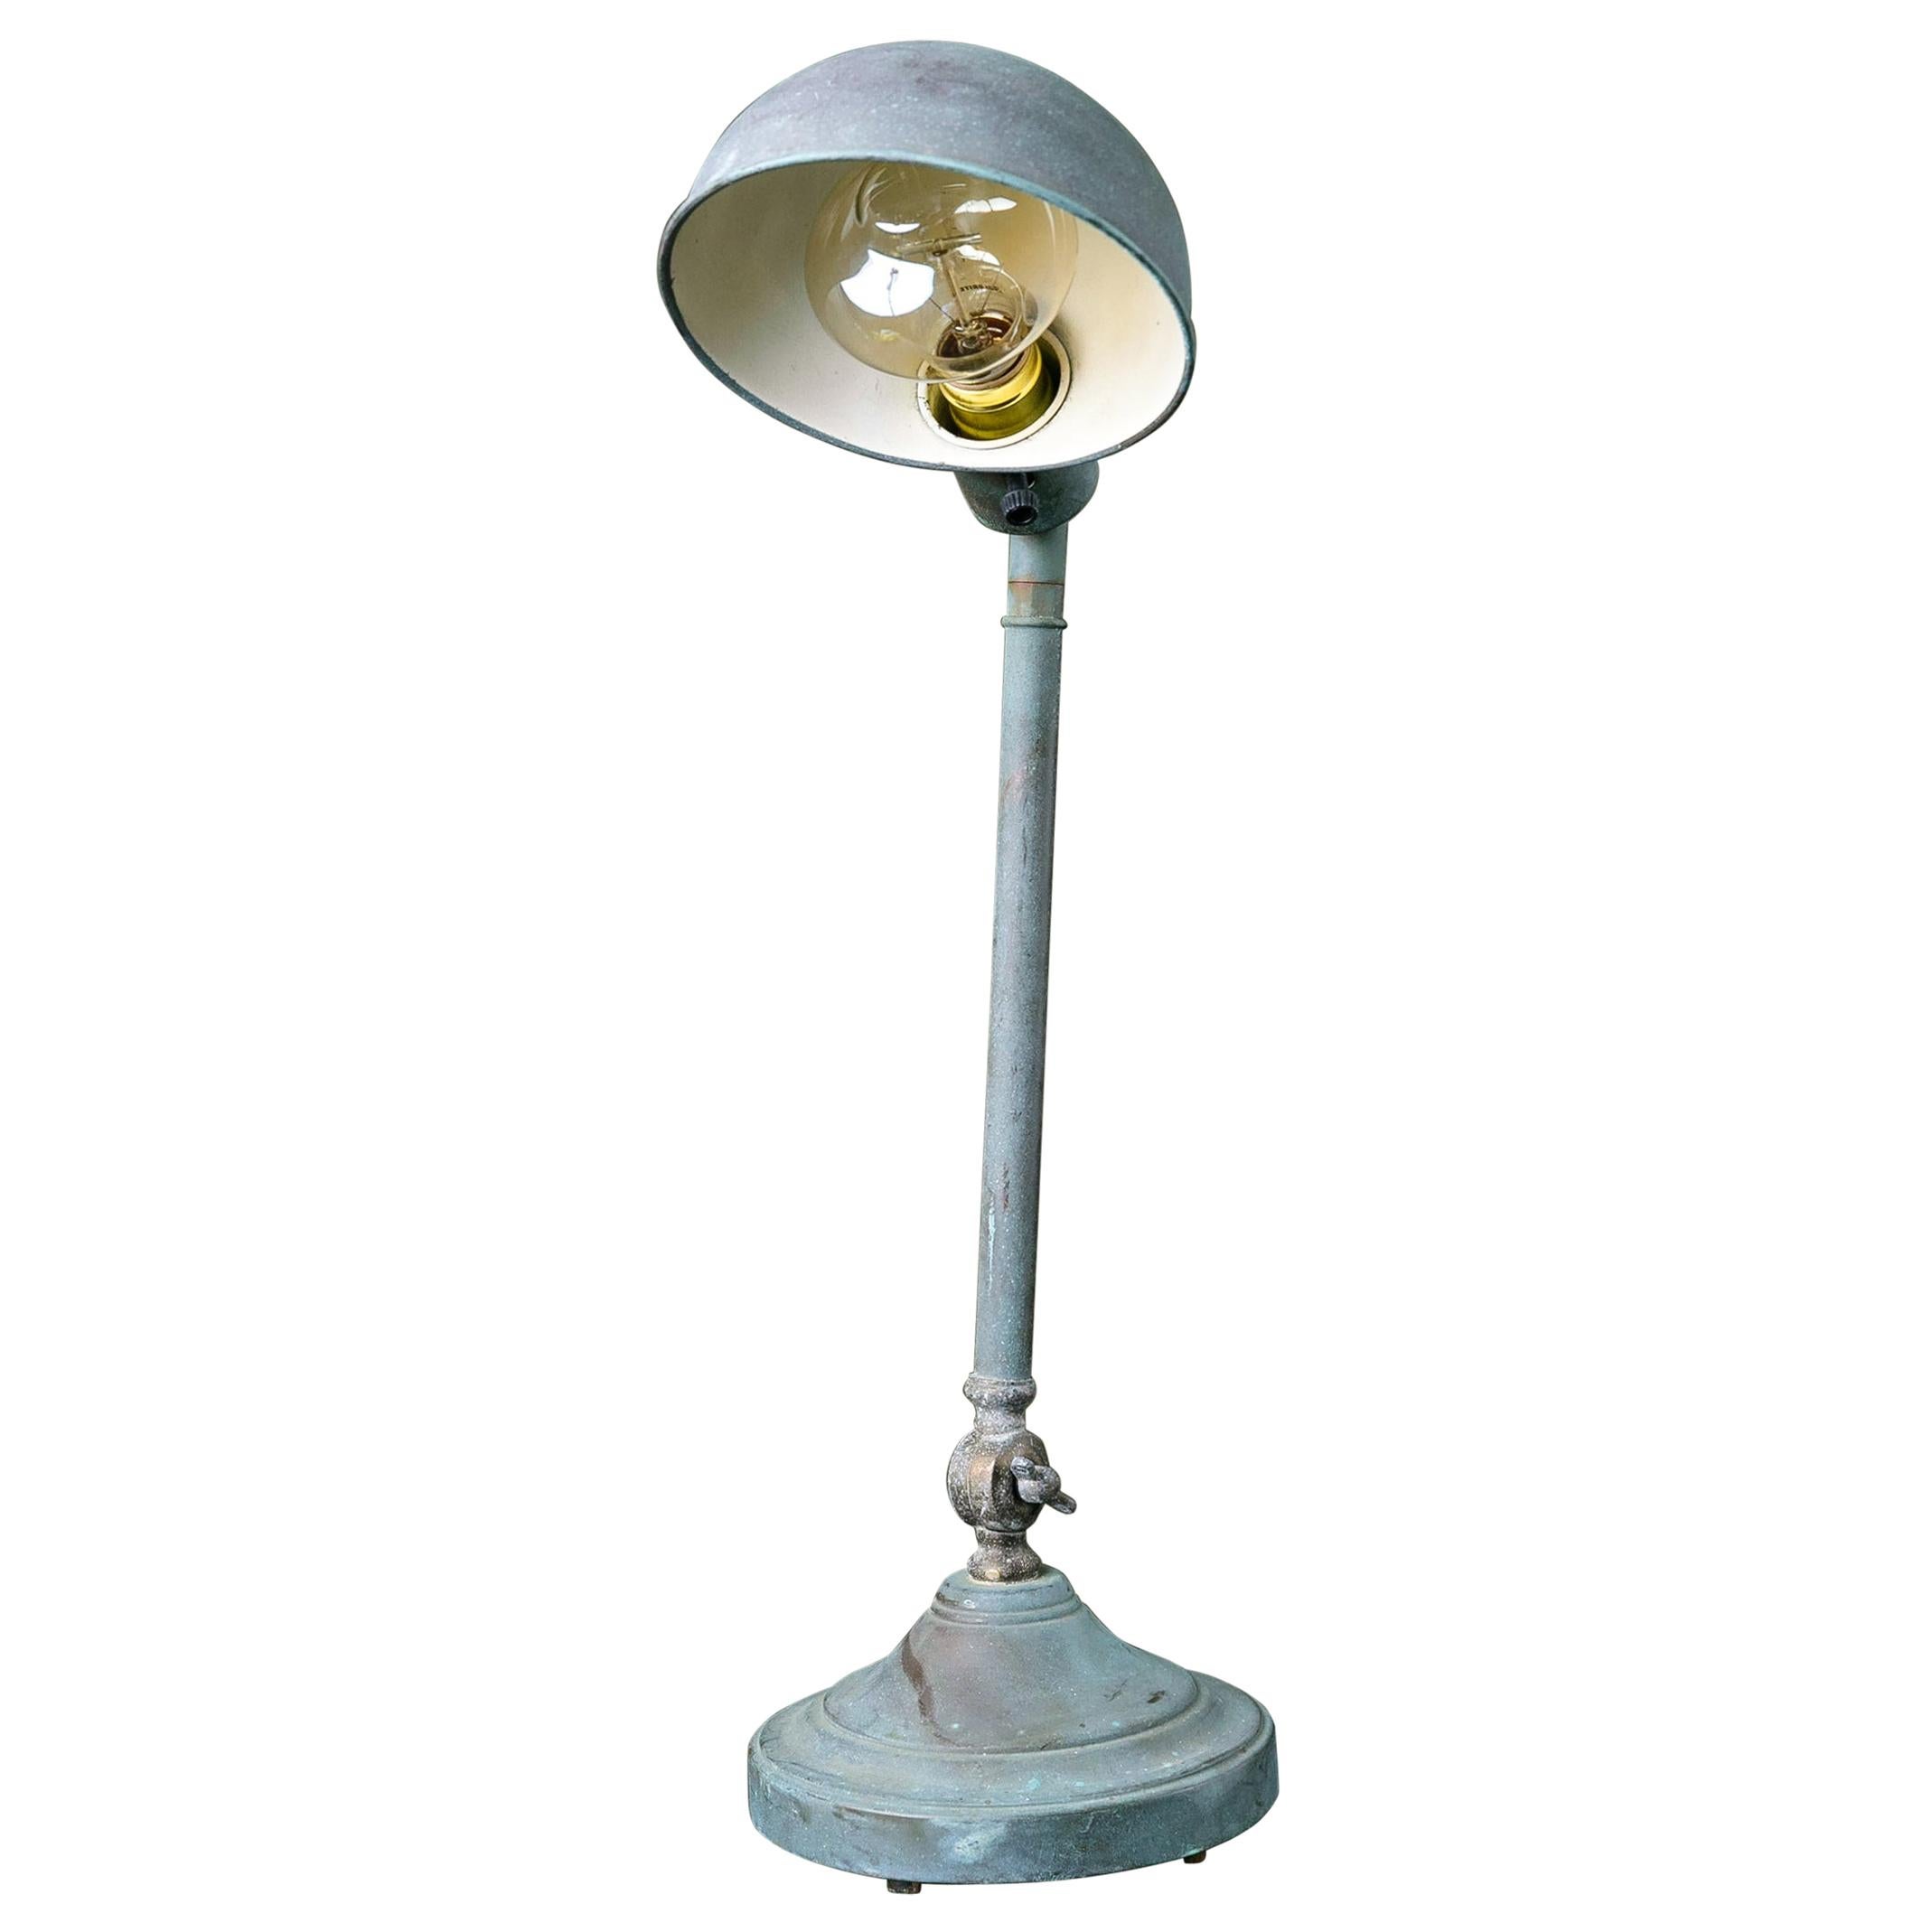  Vintage Industrial Task or Desk Lamp with Interesting Patina